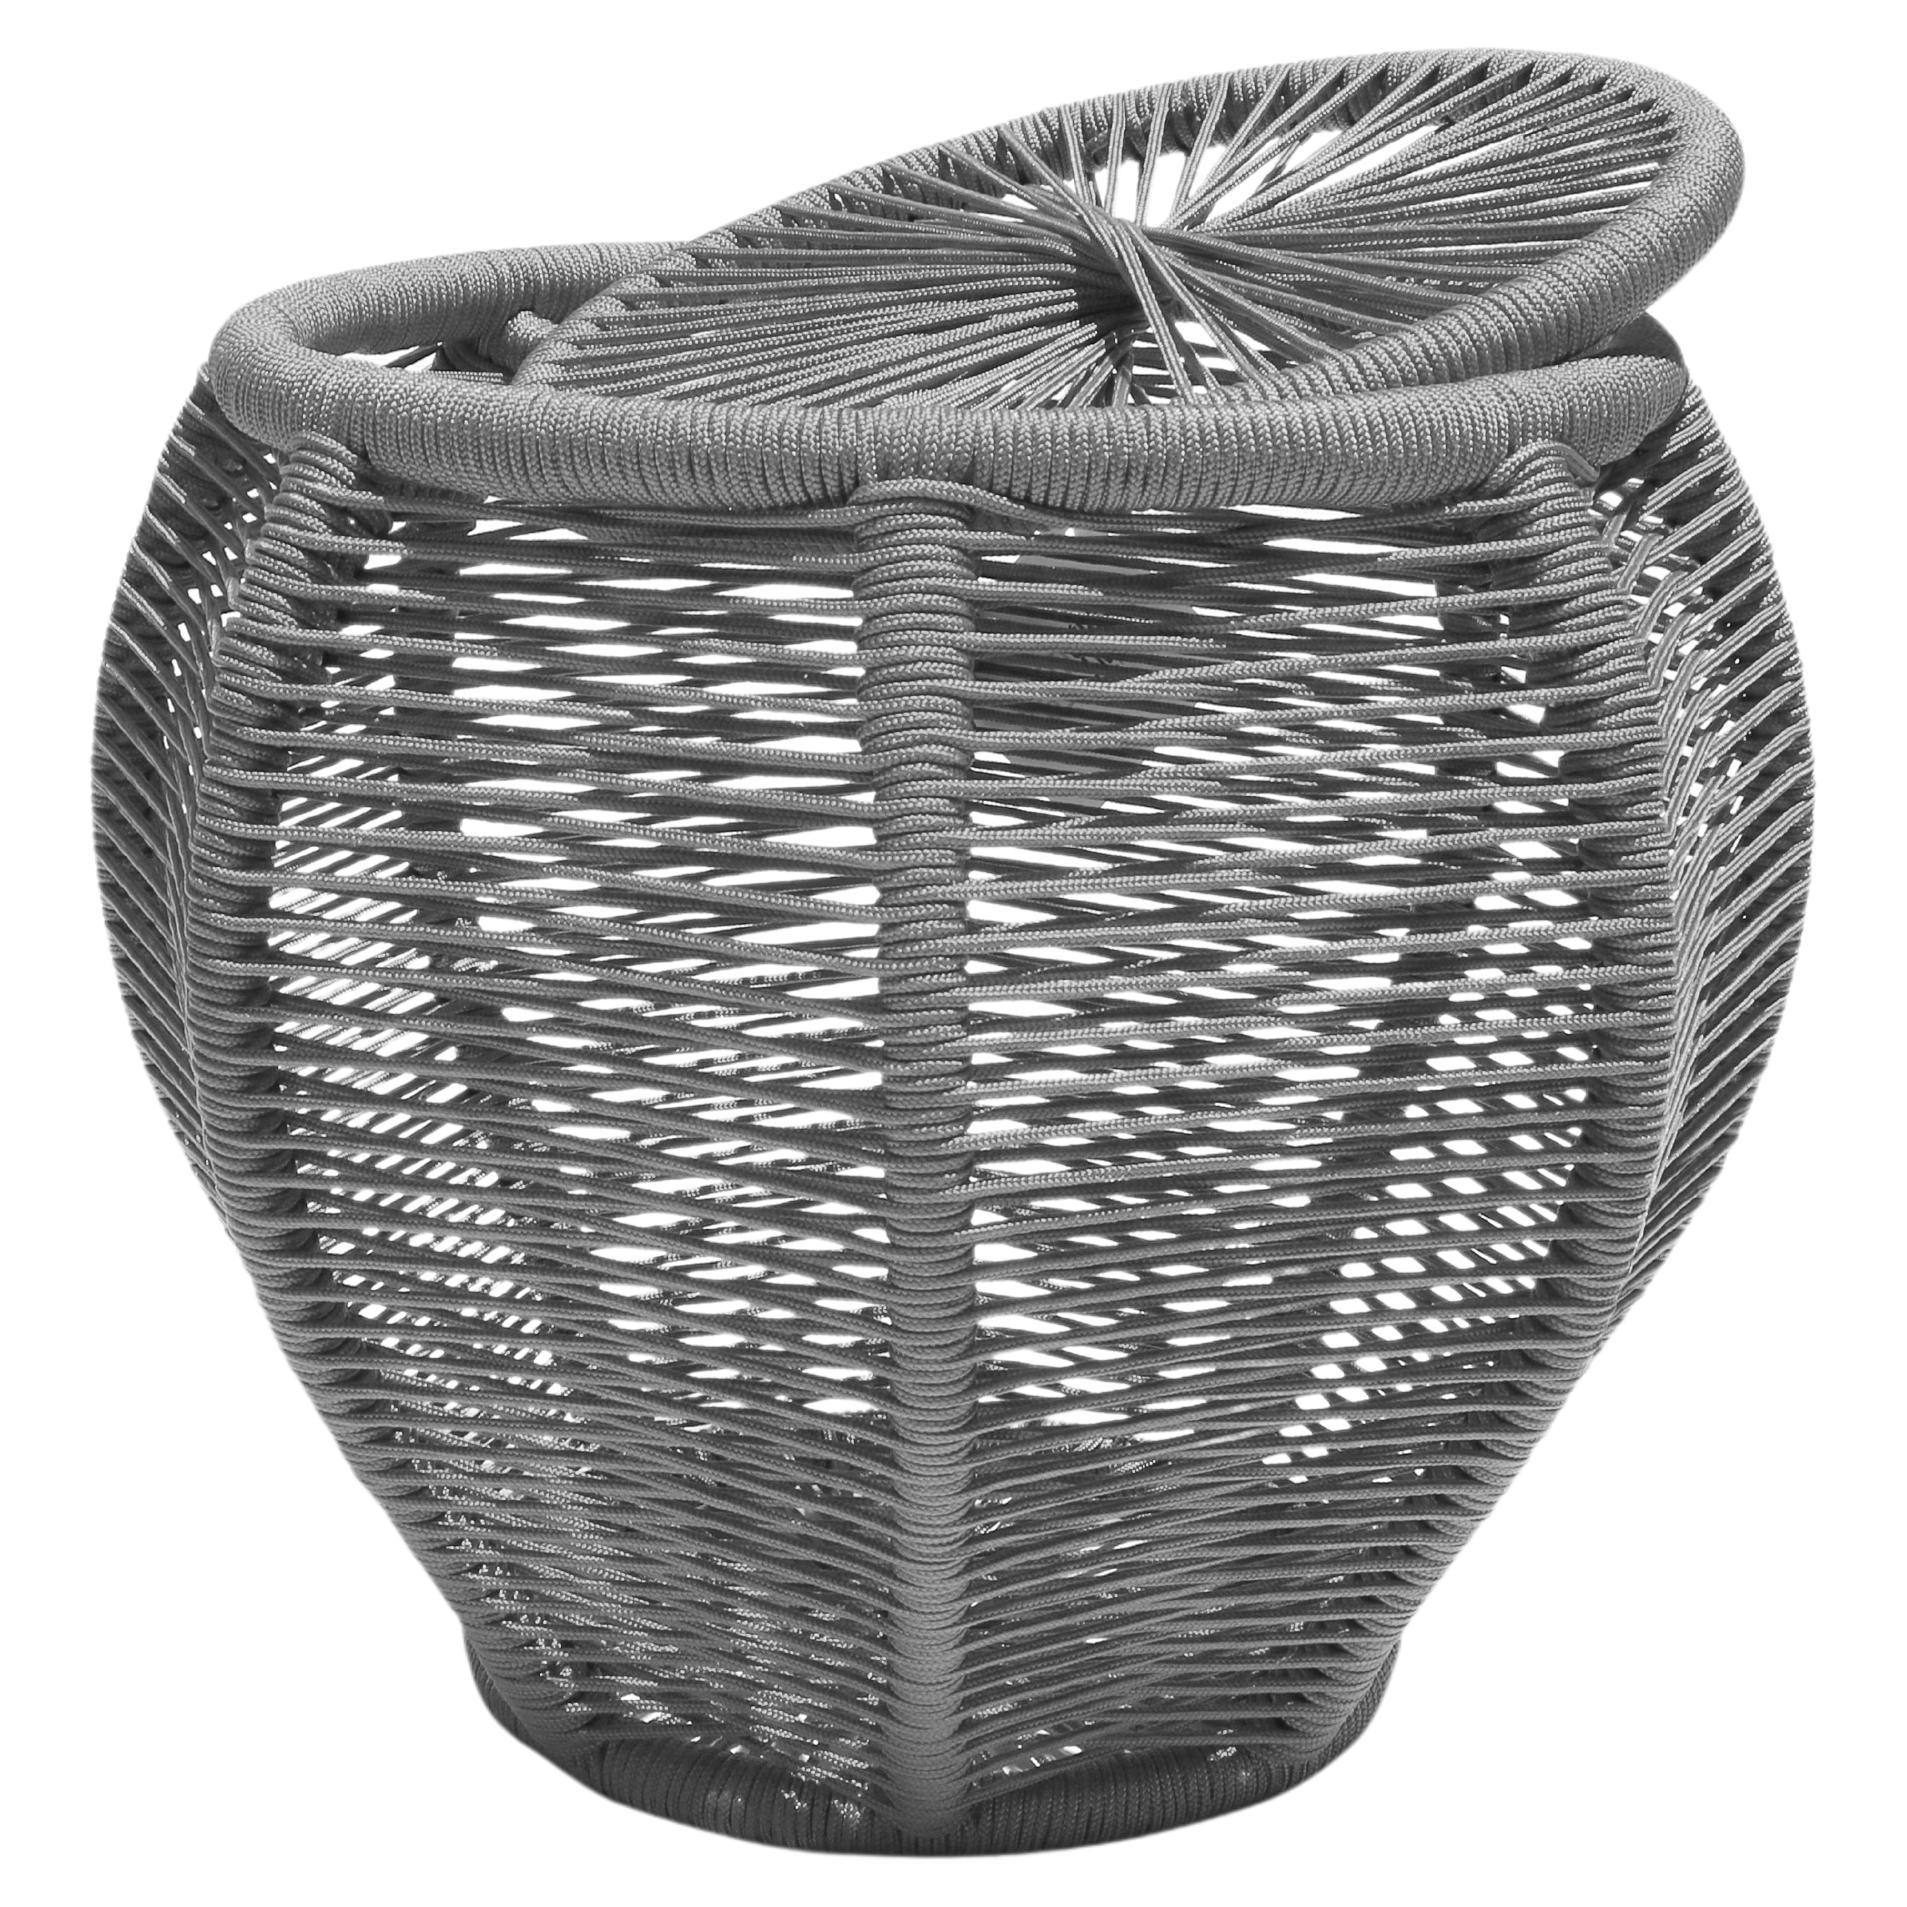 Carambola Basket For Sale